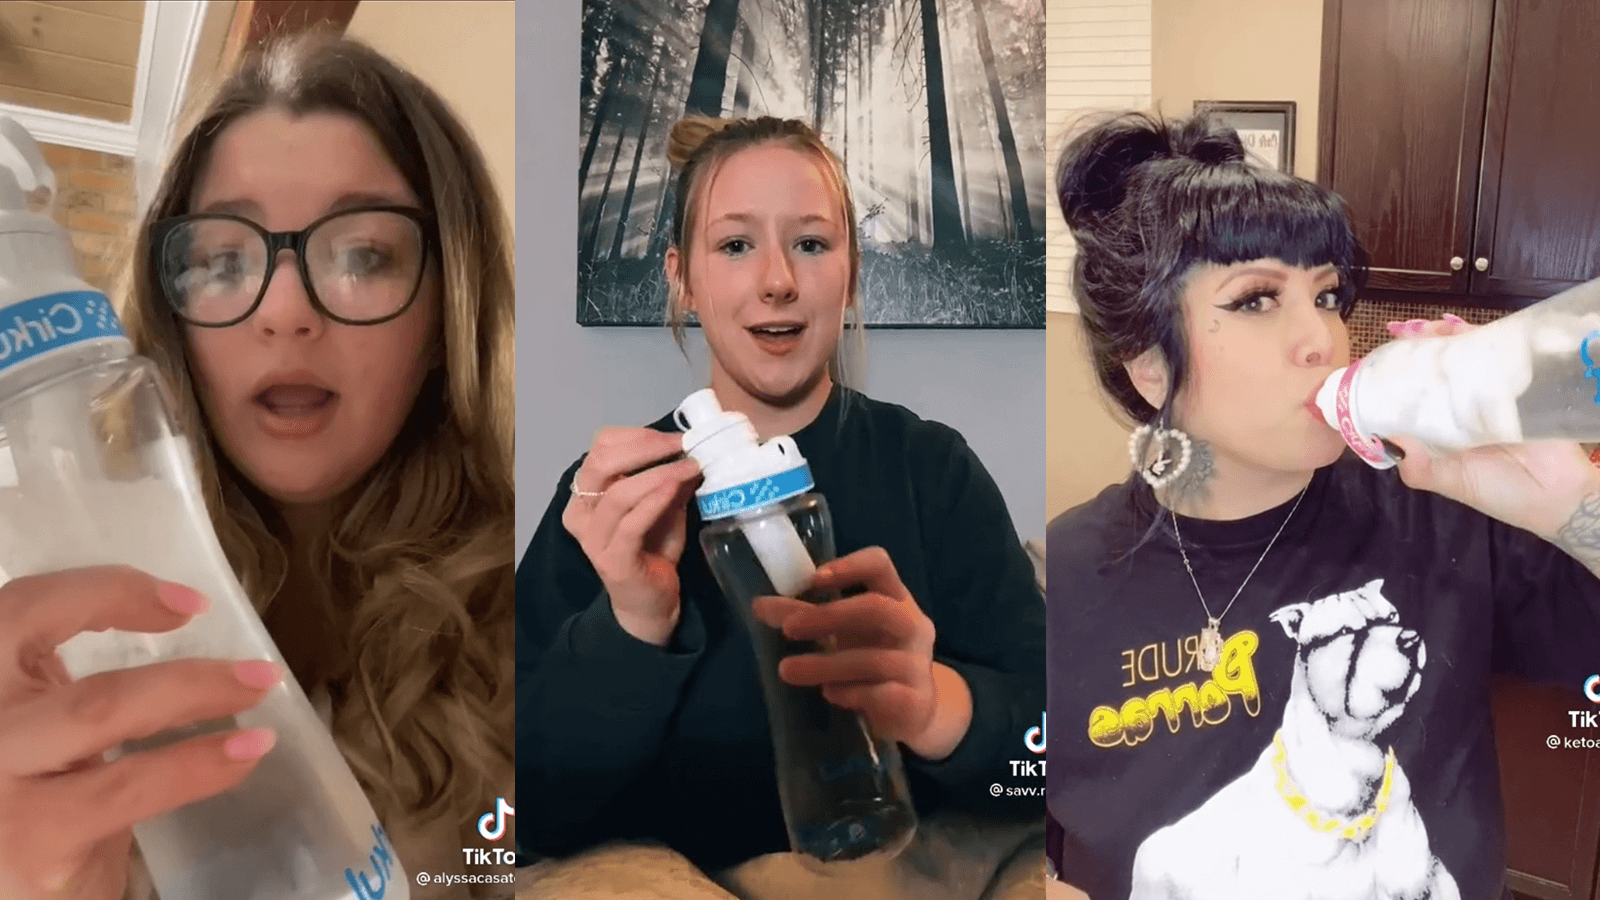 9 Water Bottles That Have Gone Viral On TikTok